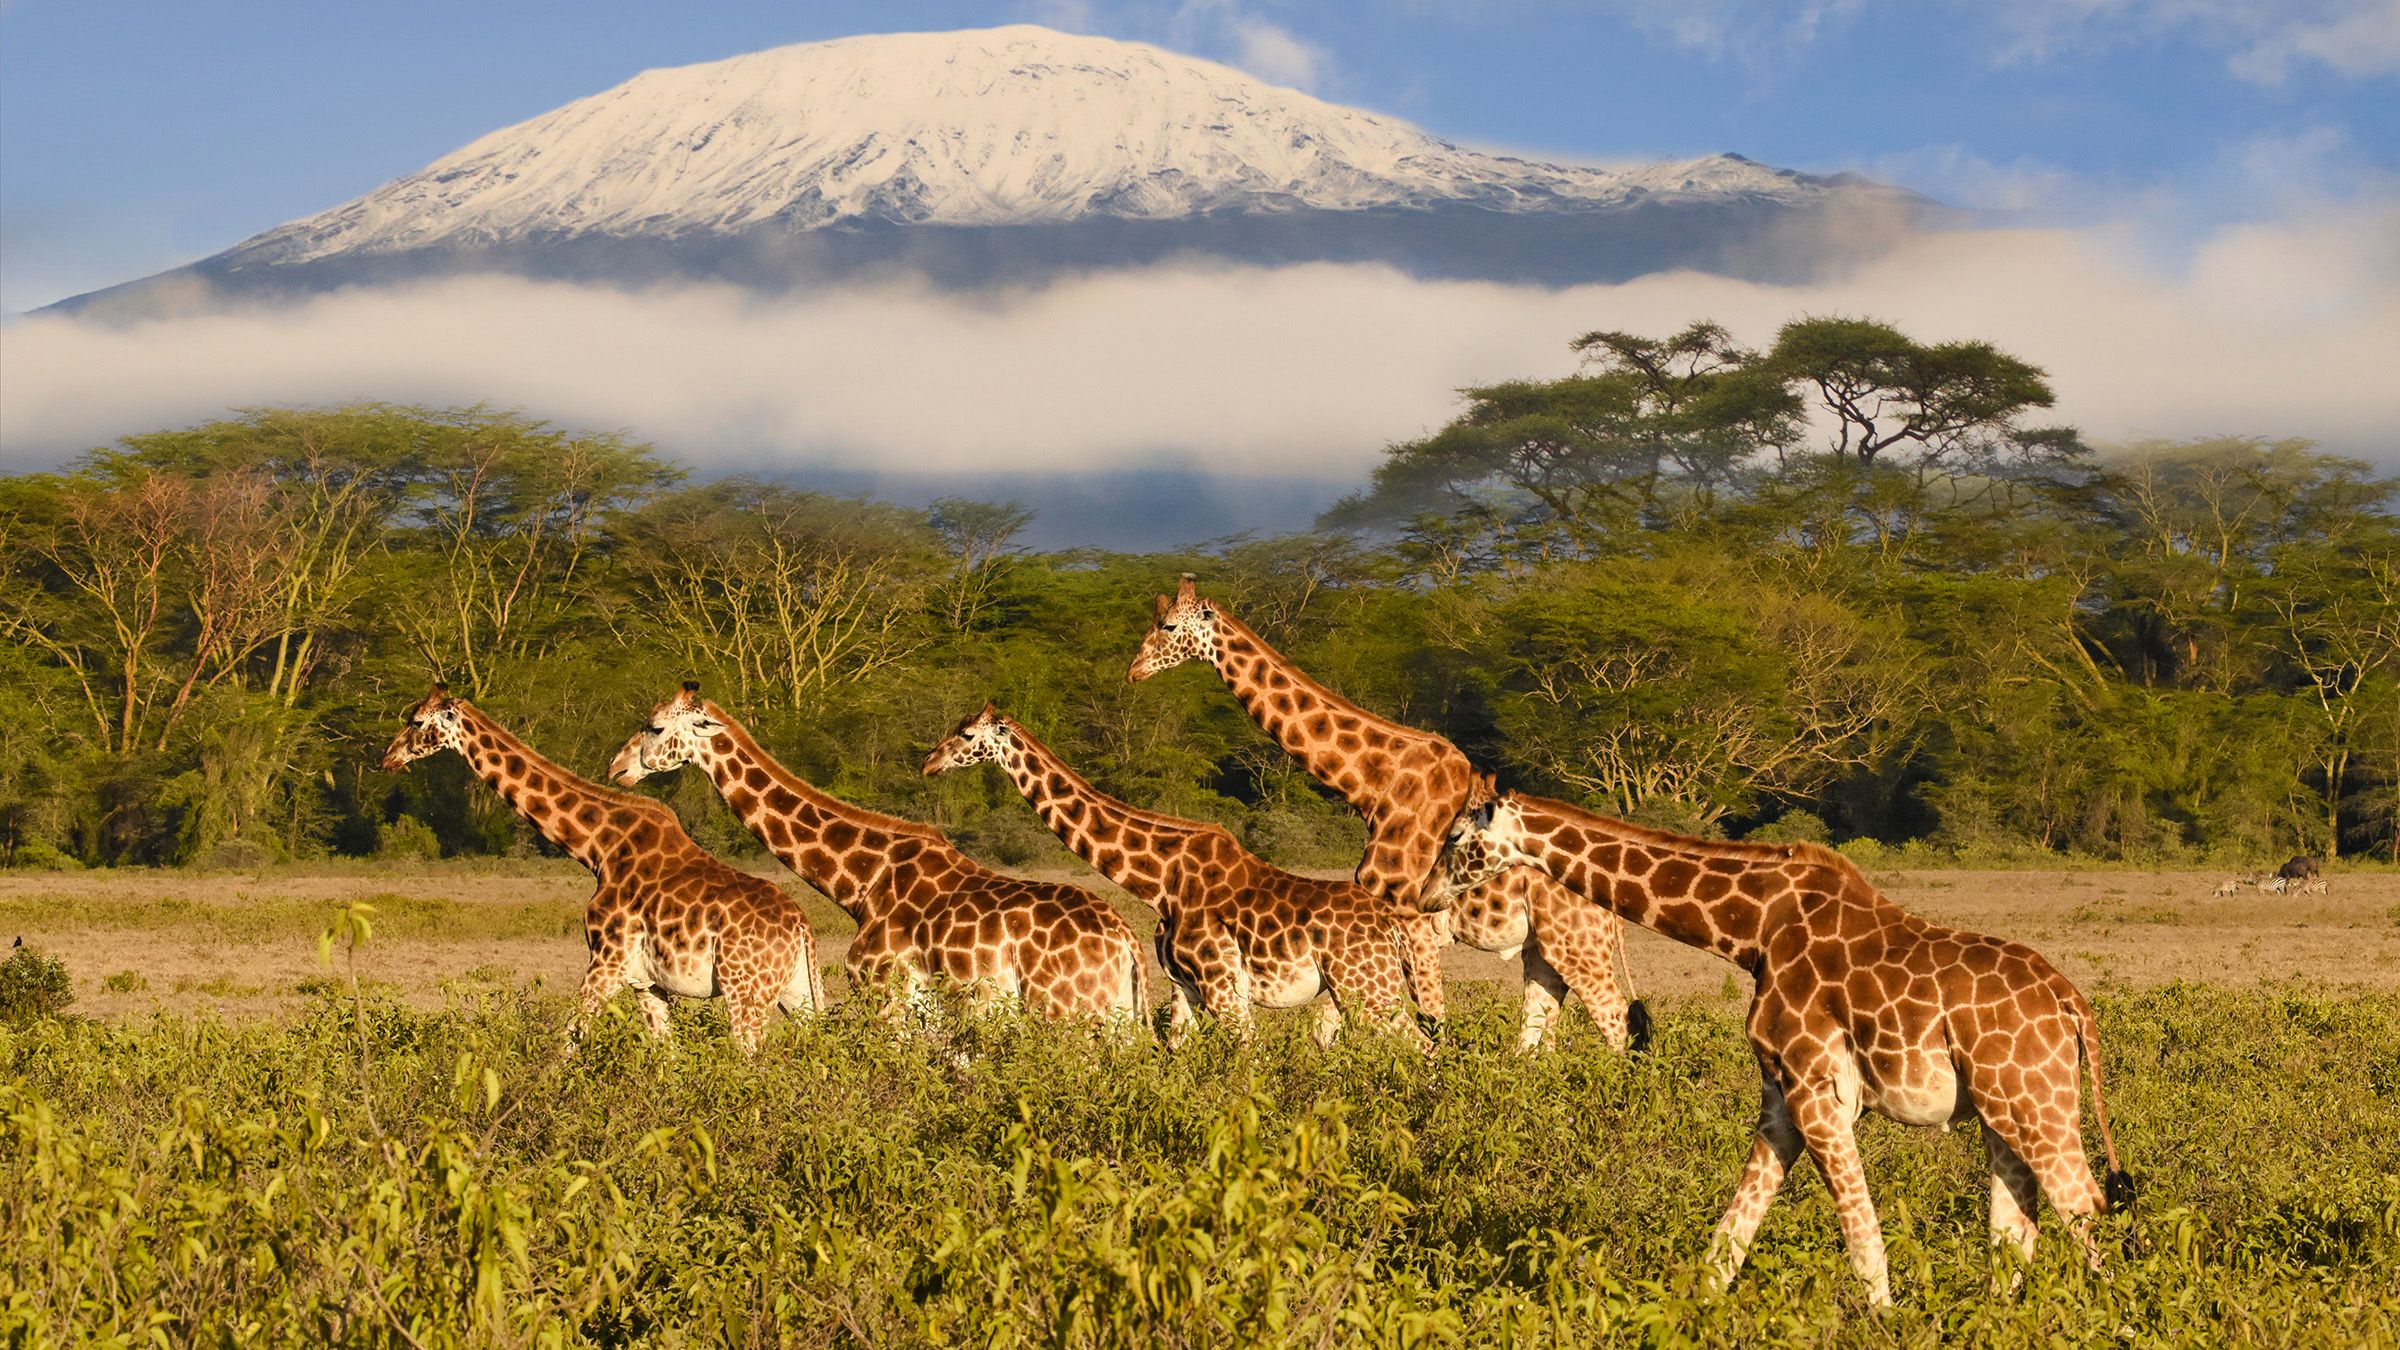 Giraffes and Kilimanjaro